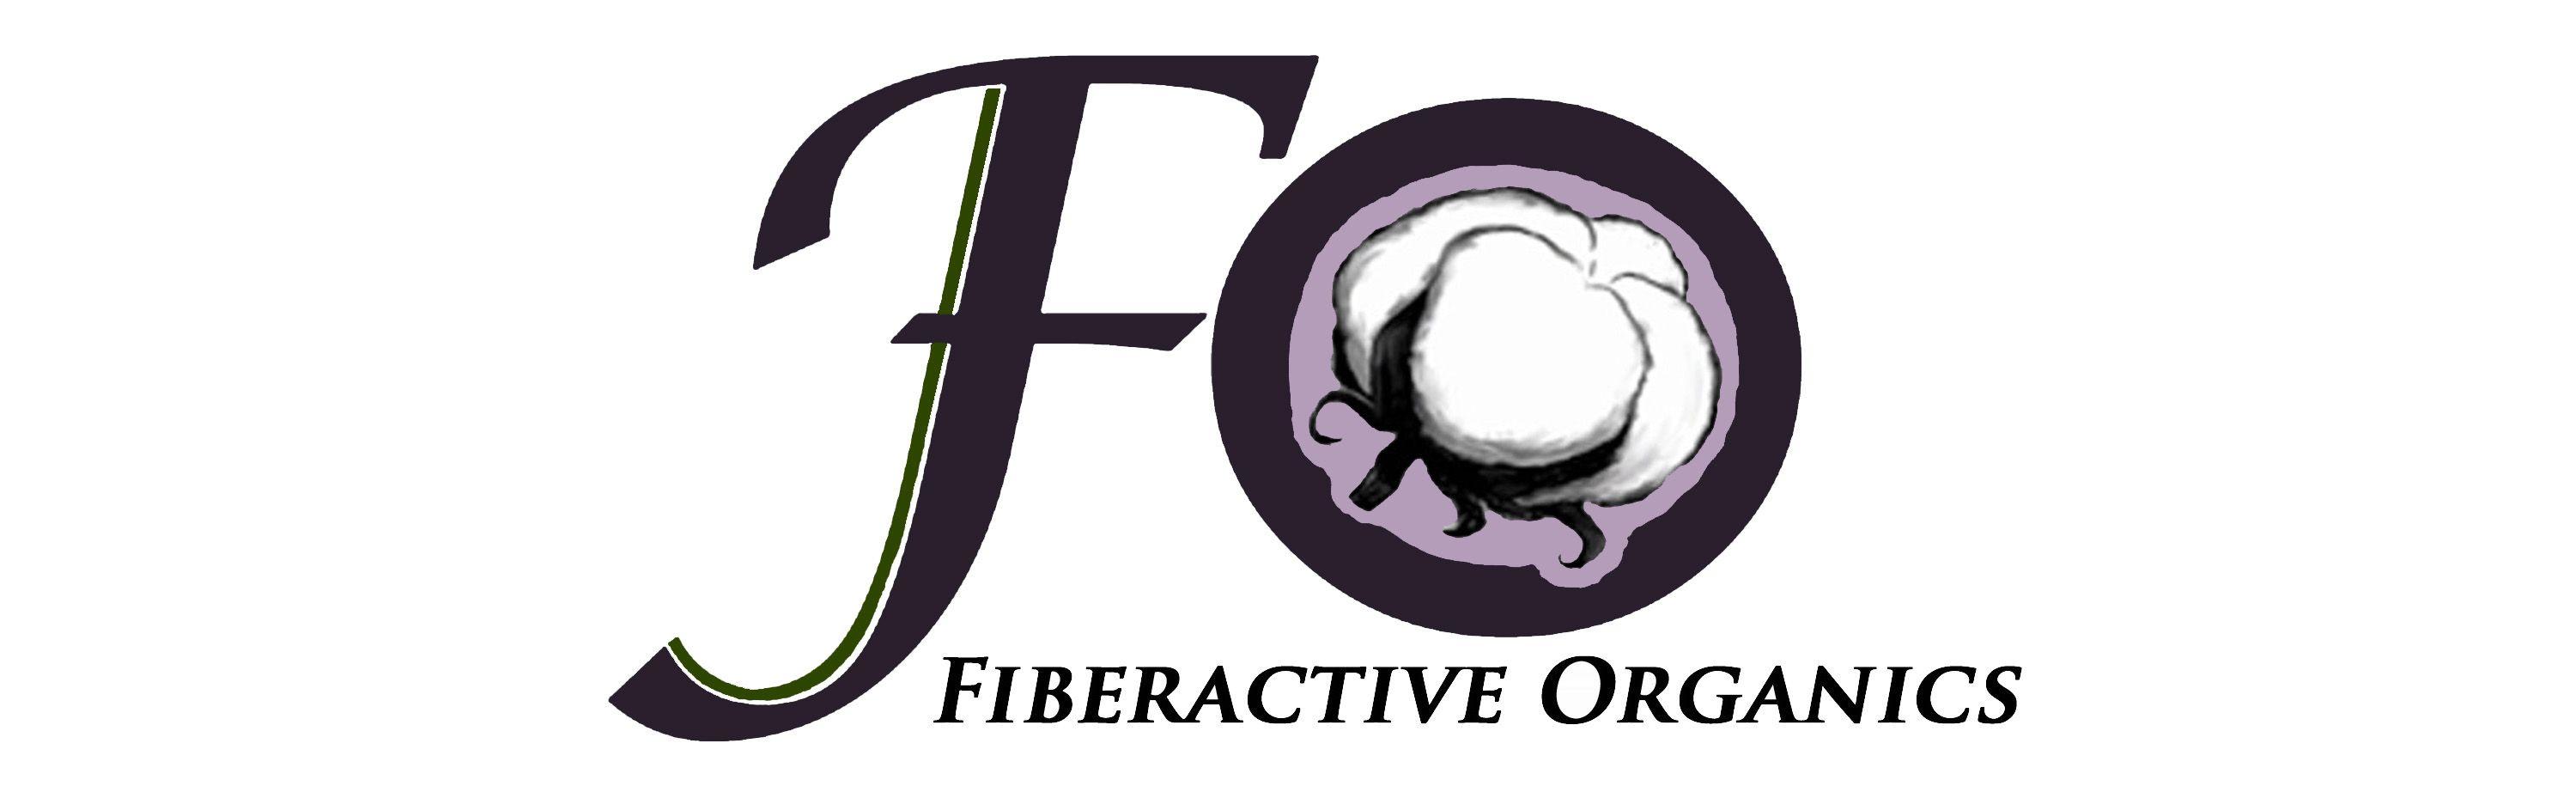 Fo Logo - Fiberactive Organics | GOTS certified organic cotton sewing thread